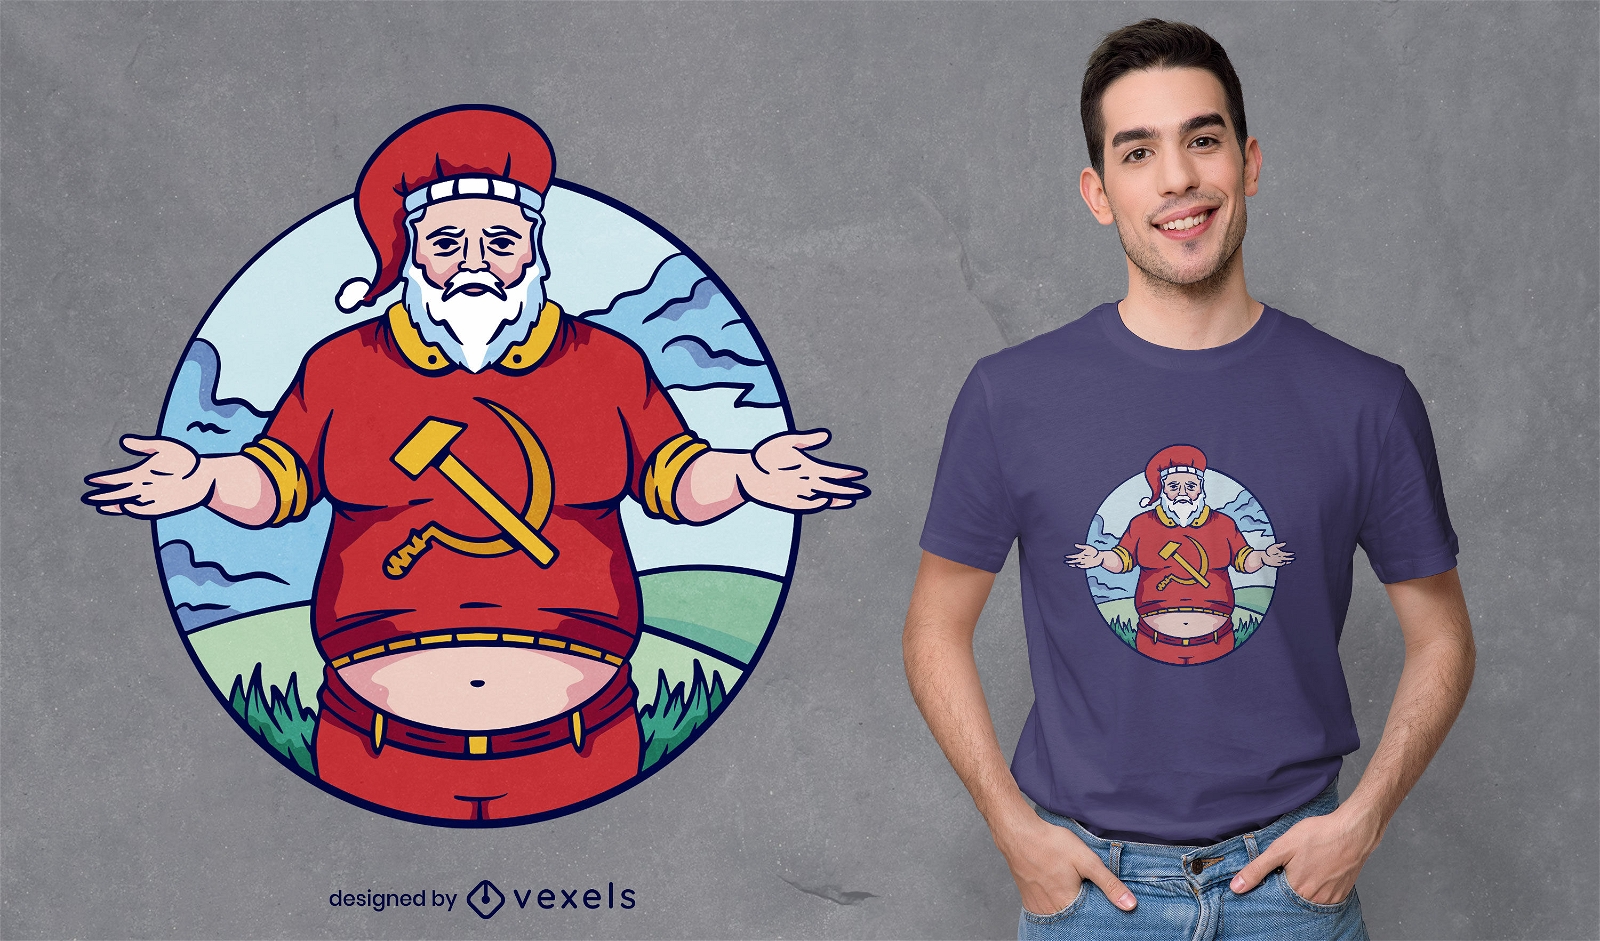 Divertido dise?o de camiseta comunista de Santa Navidad.